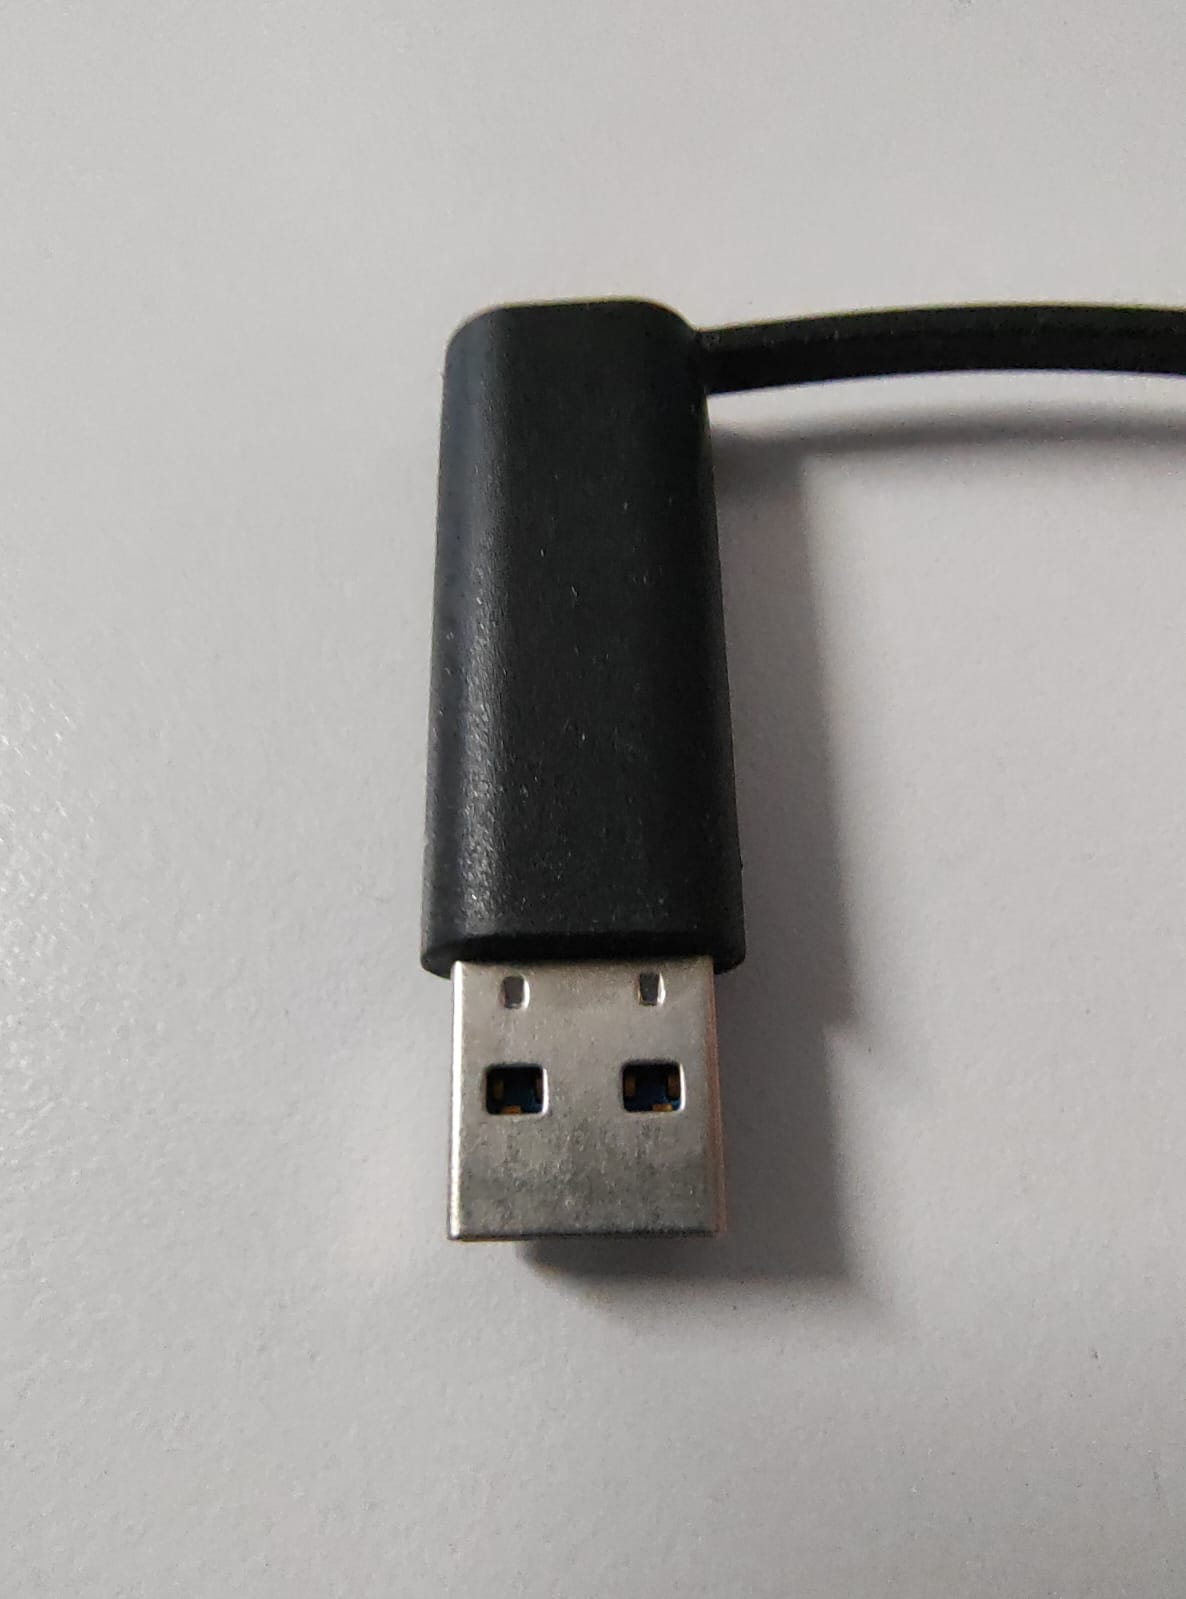 USB-C auf USB A Adapter mit schlaufe